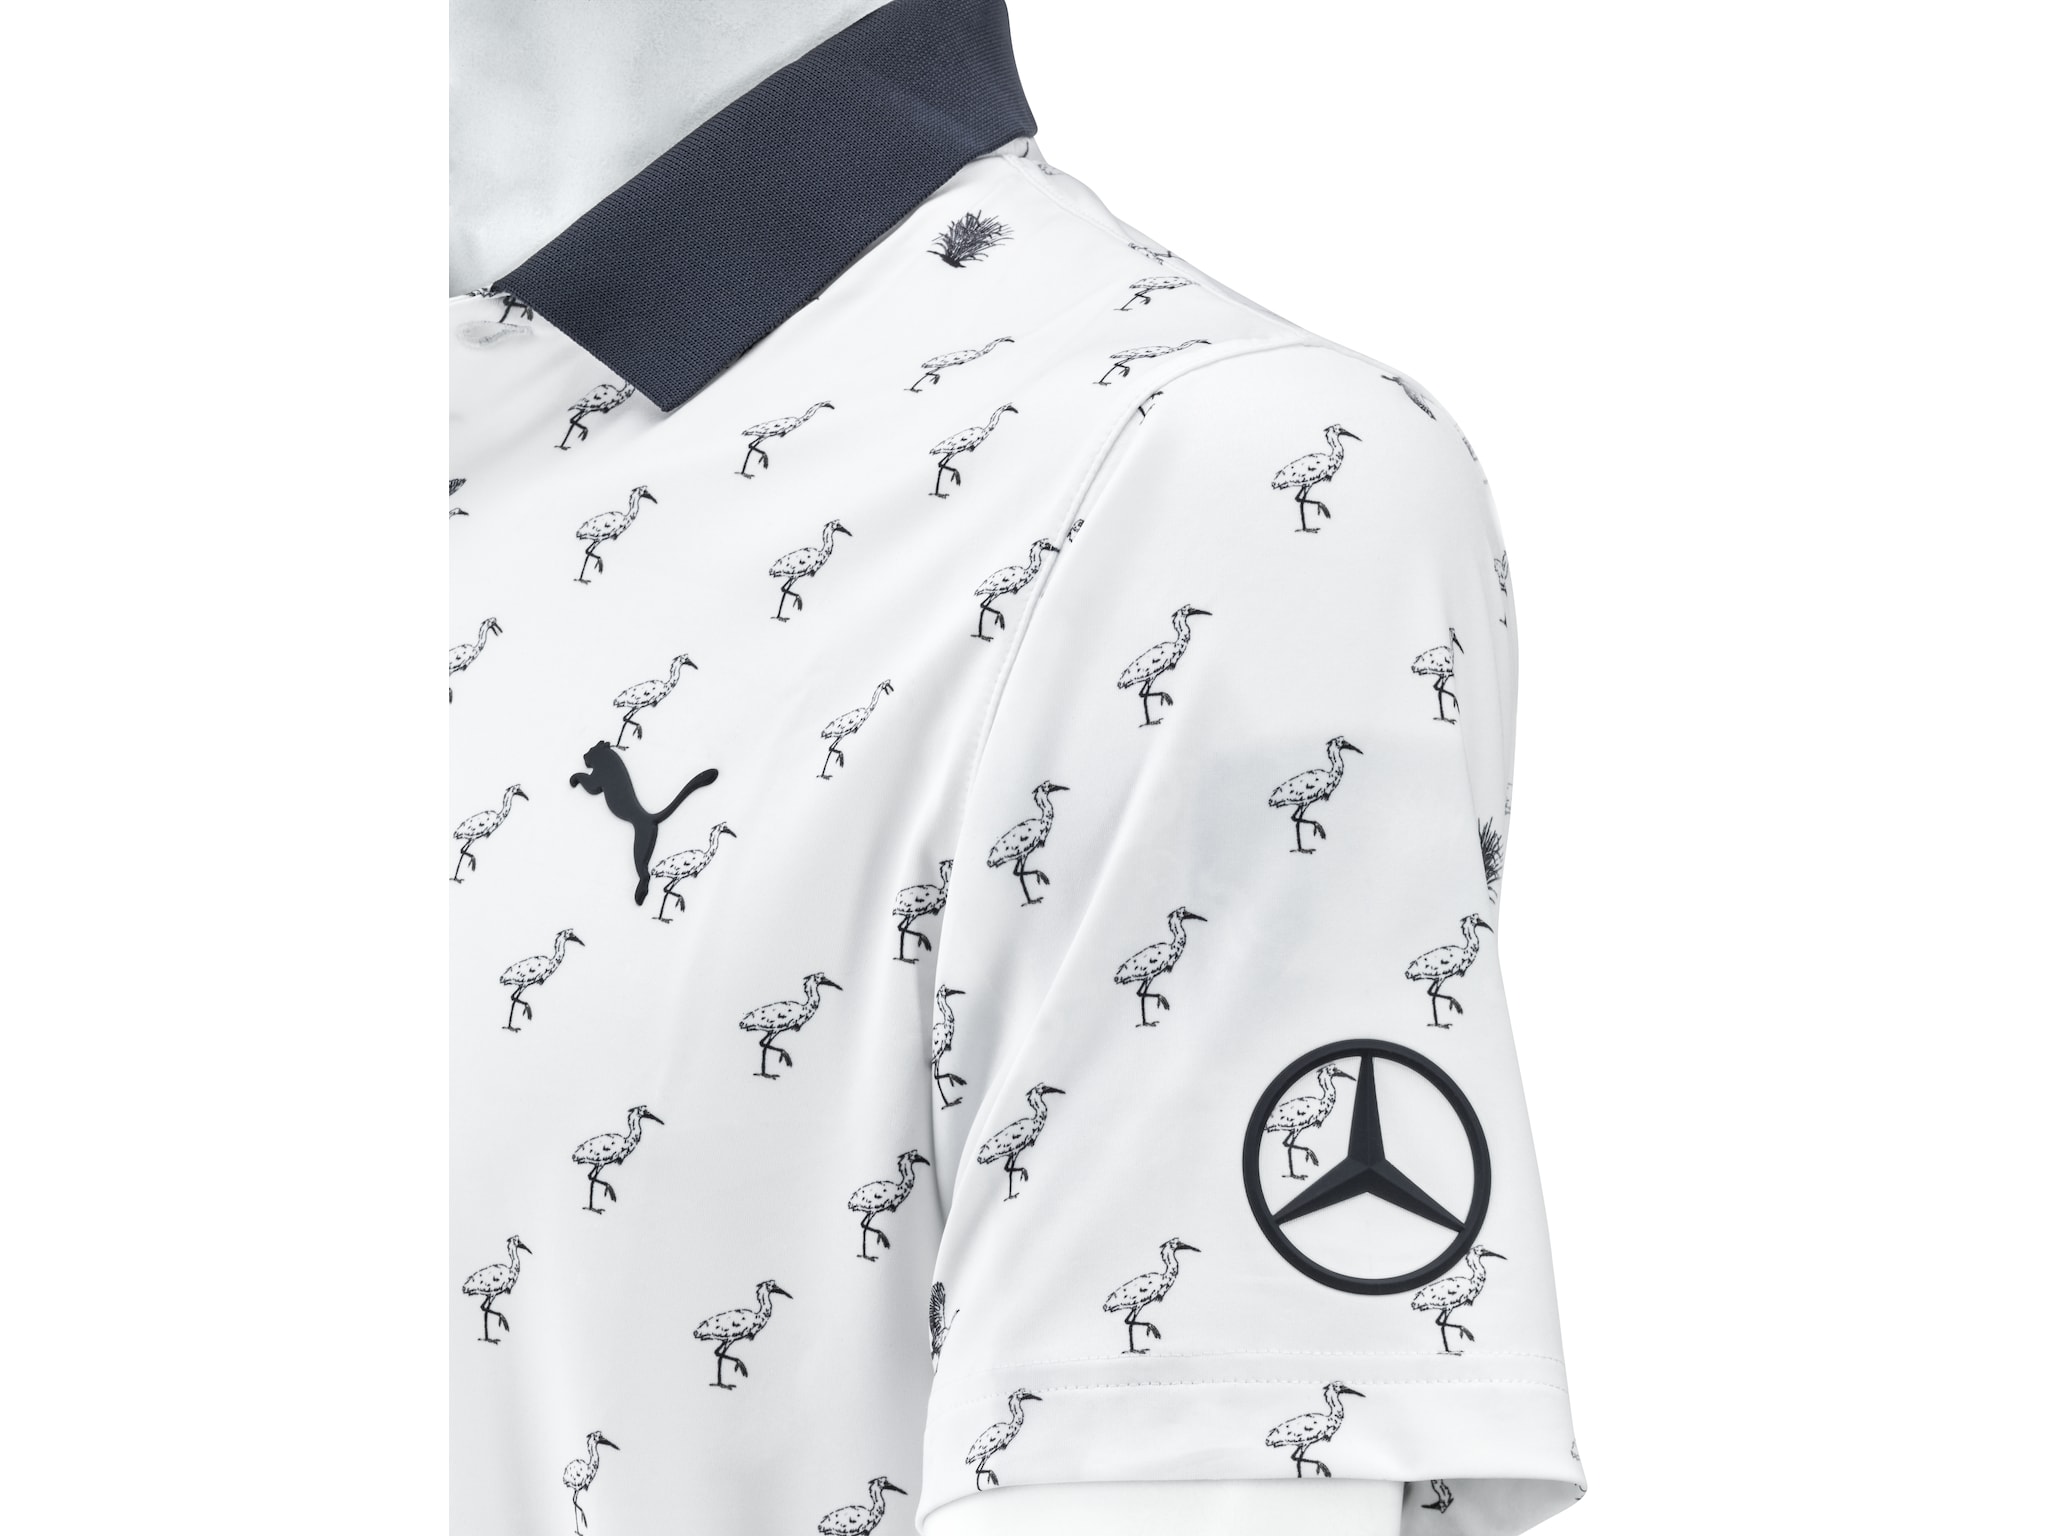 Golf-Poloshirt Herren - weiß, XXL